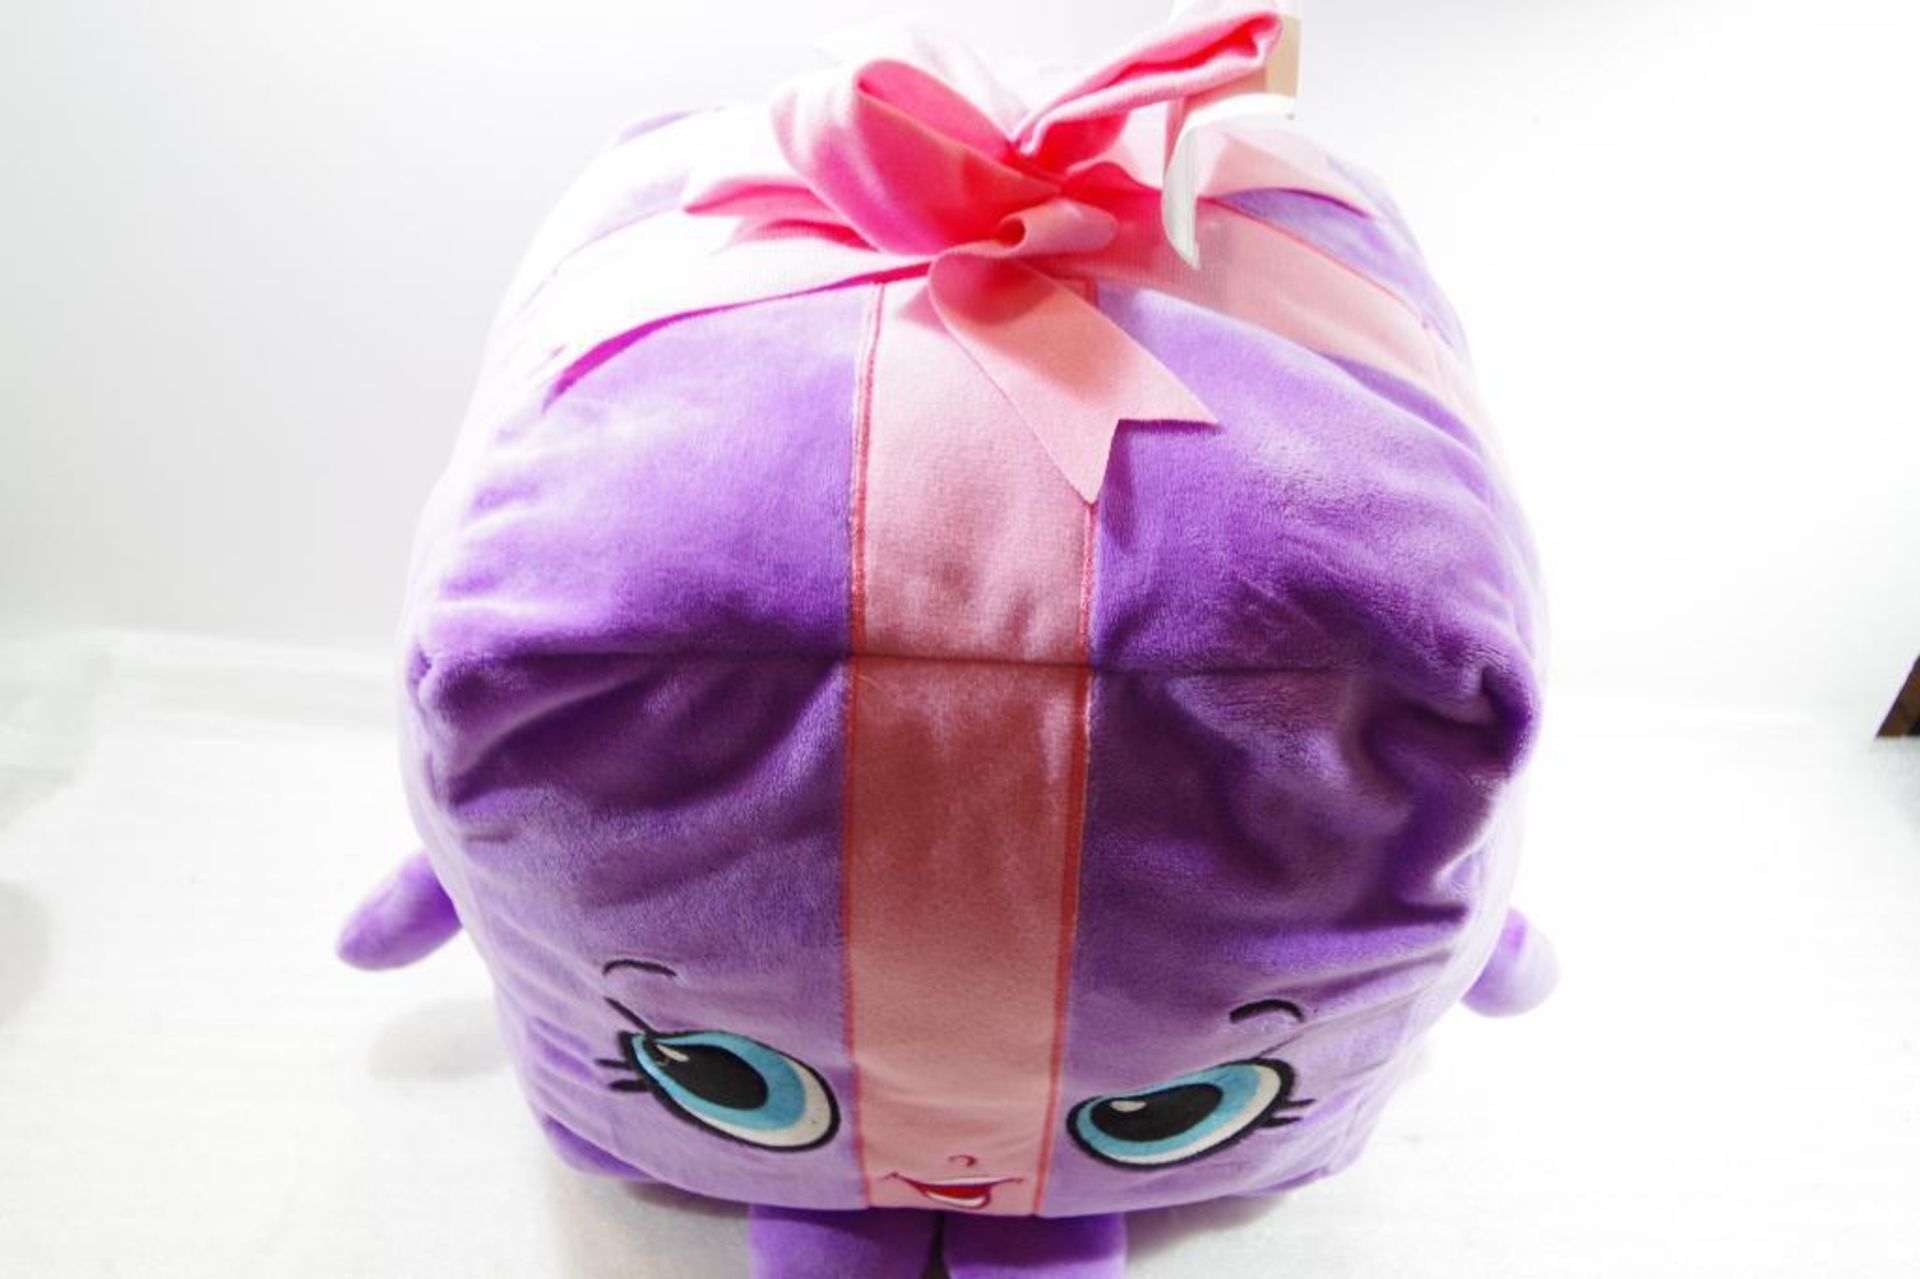 SHOPKINS "Stuffed Animal" Purple Cube w/ Eyes - Image 2 of 2